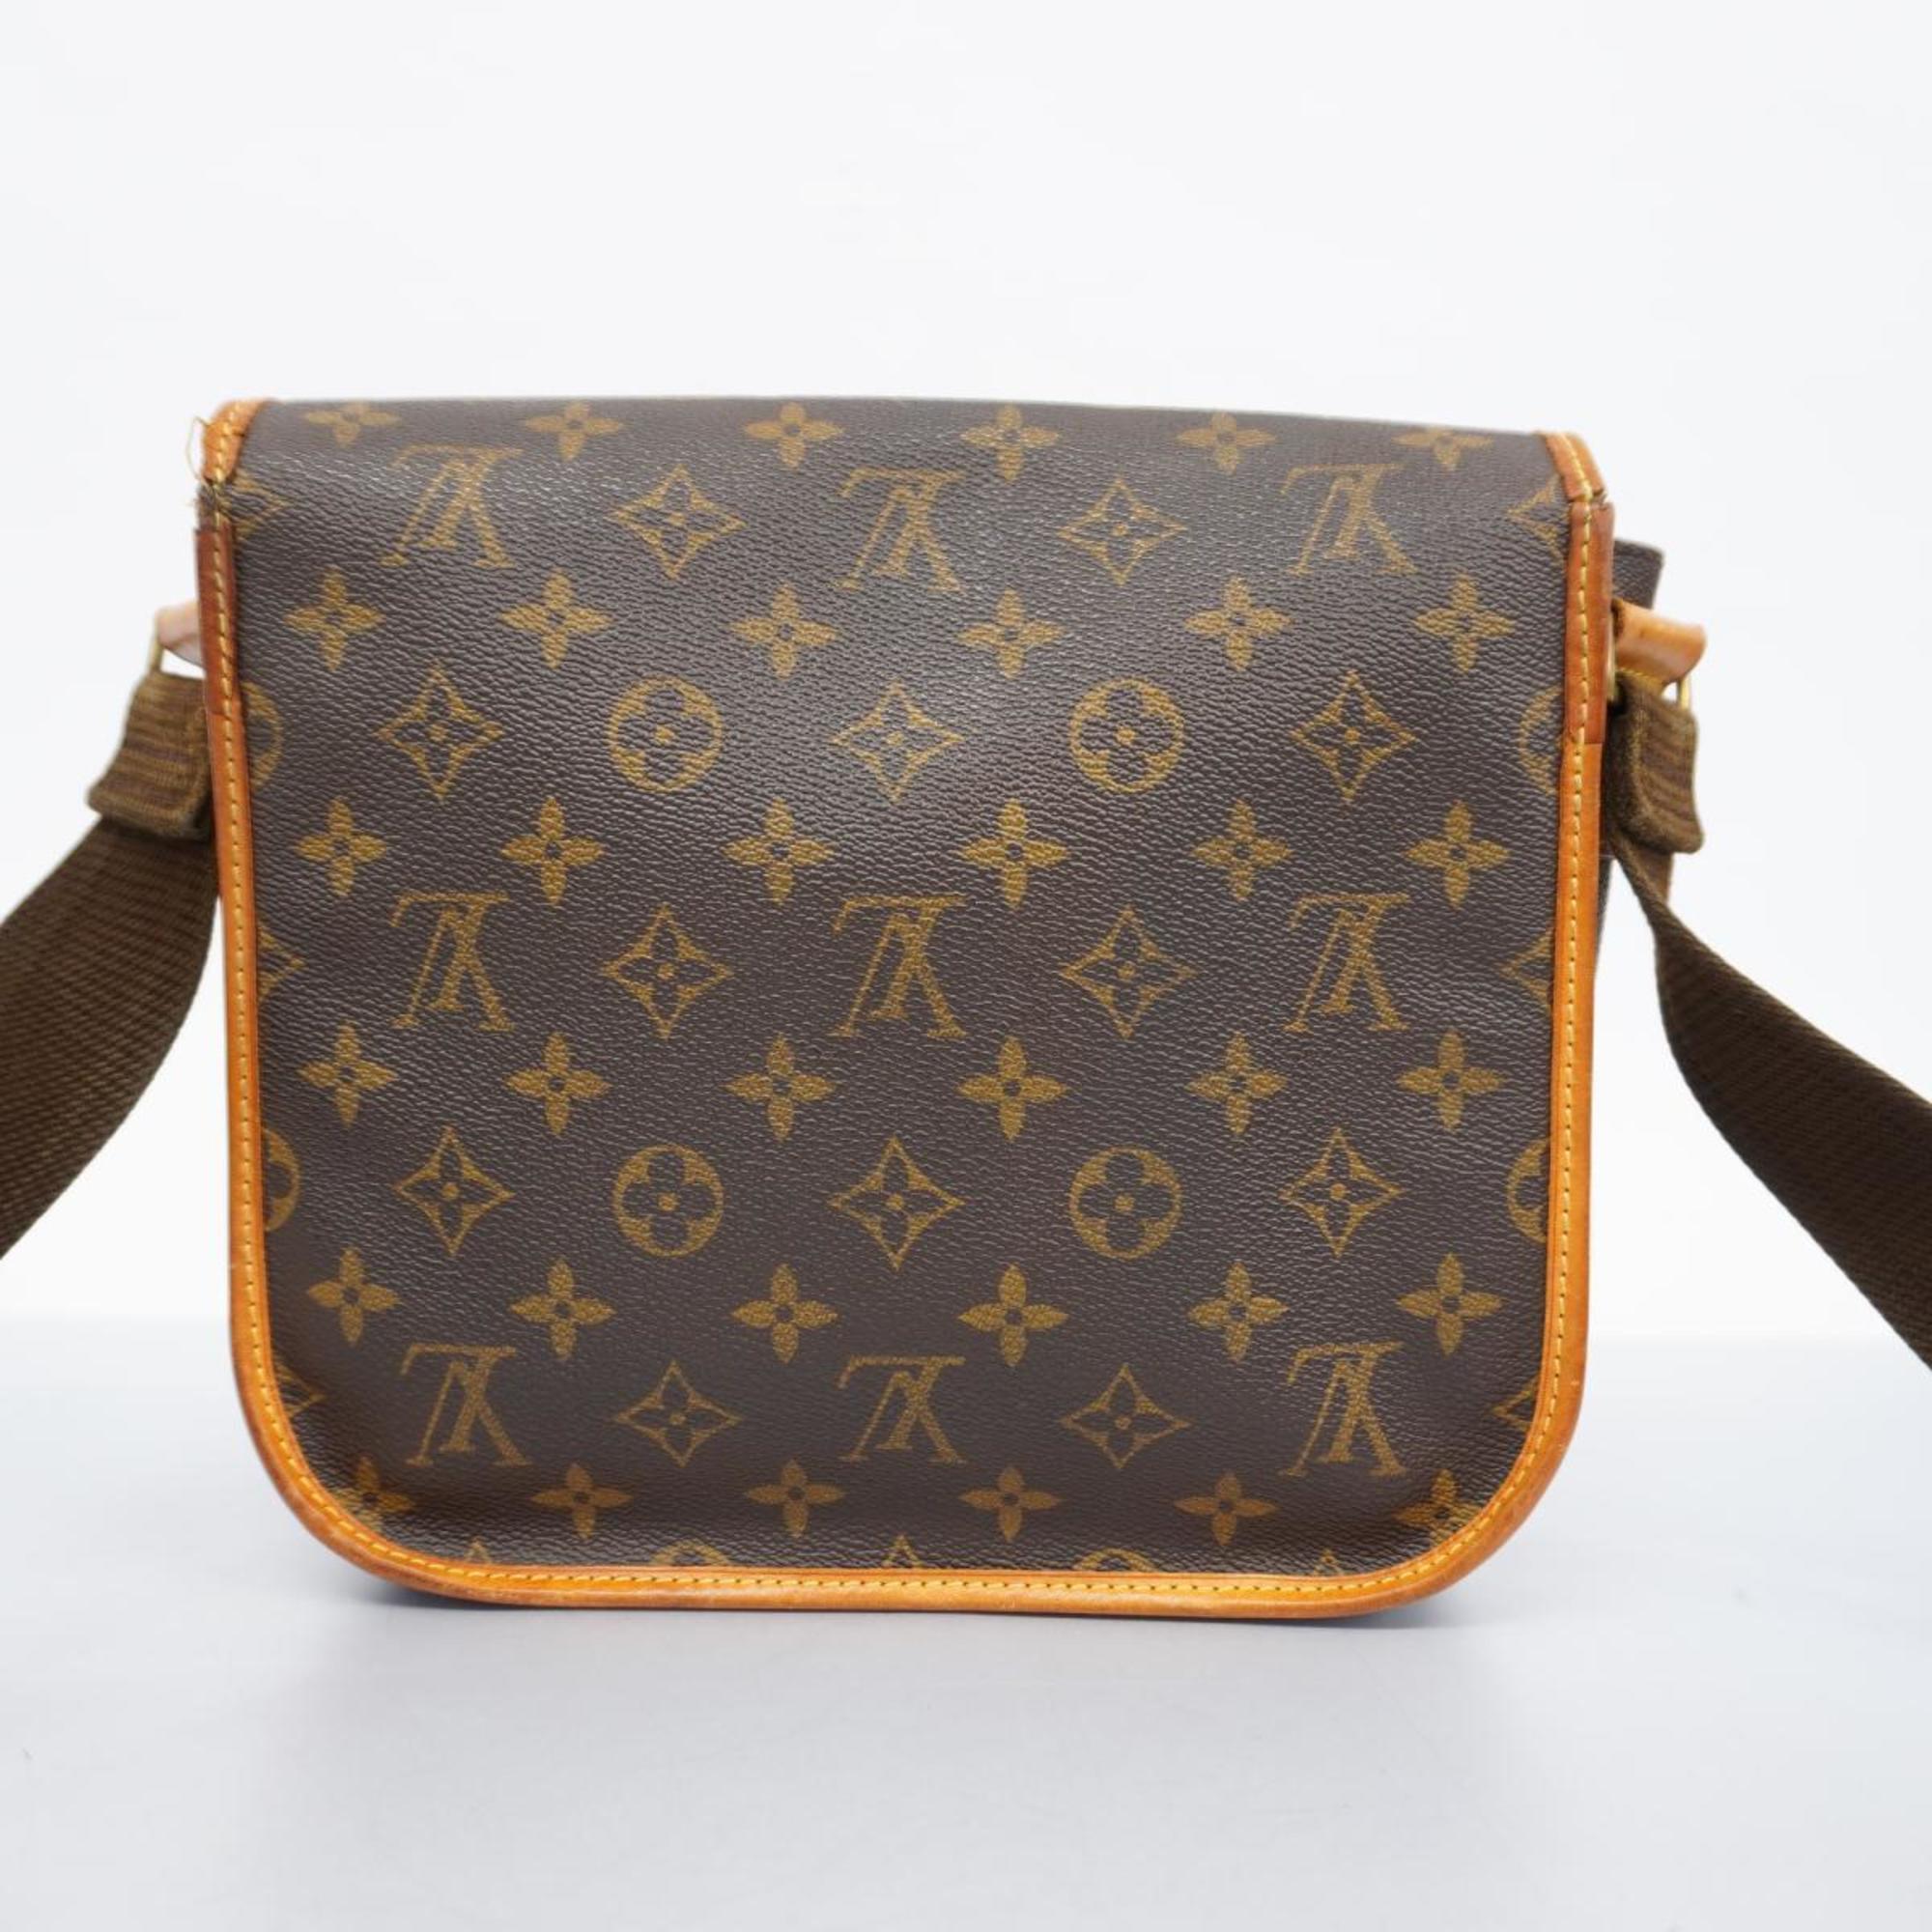 Louis Vuitton Shoulder Bag Monogram Bosphore PM M40106 Brown Ladies